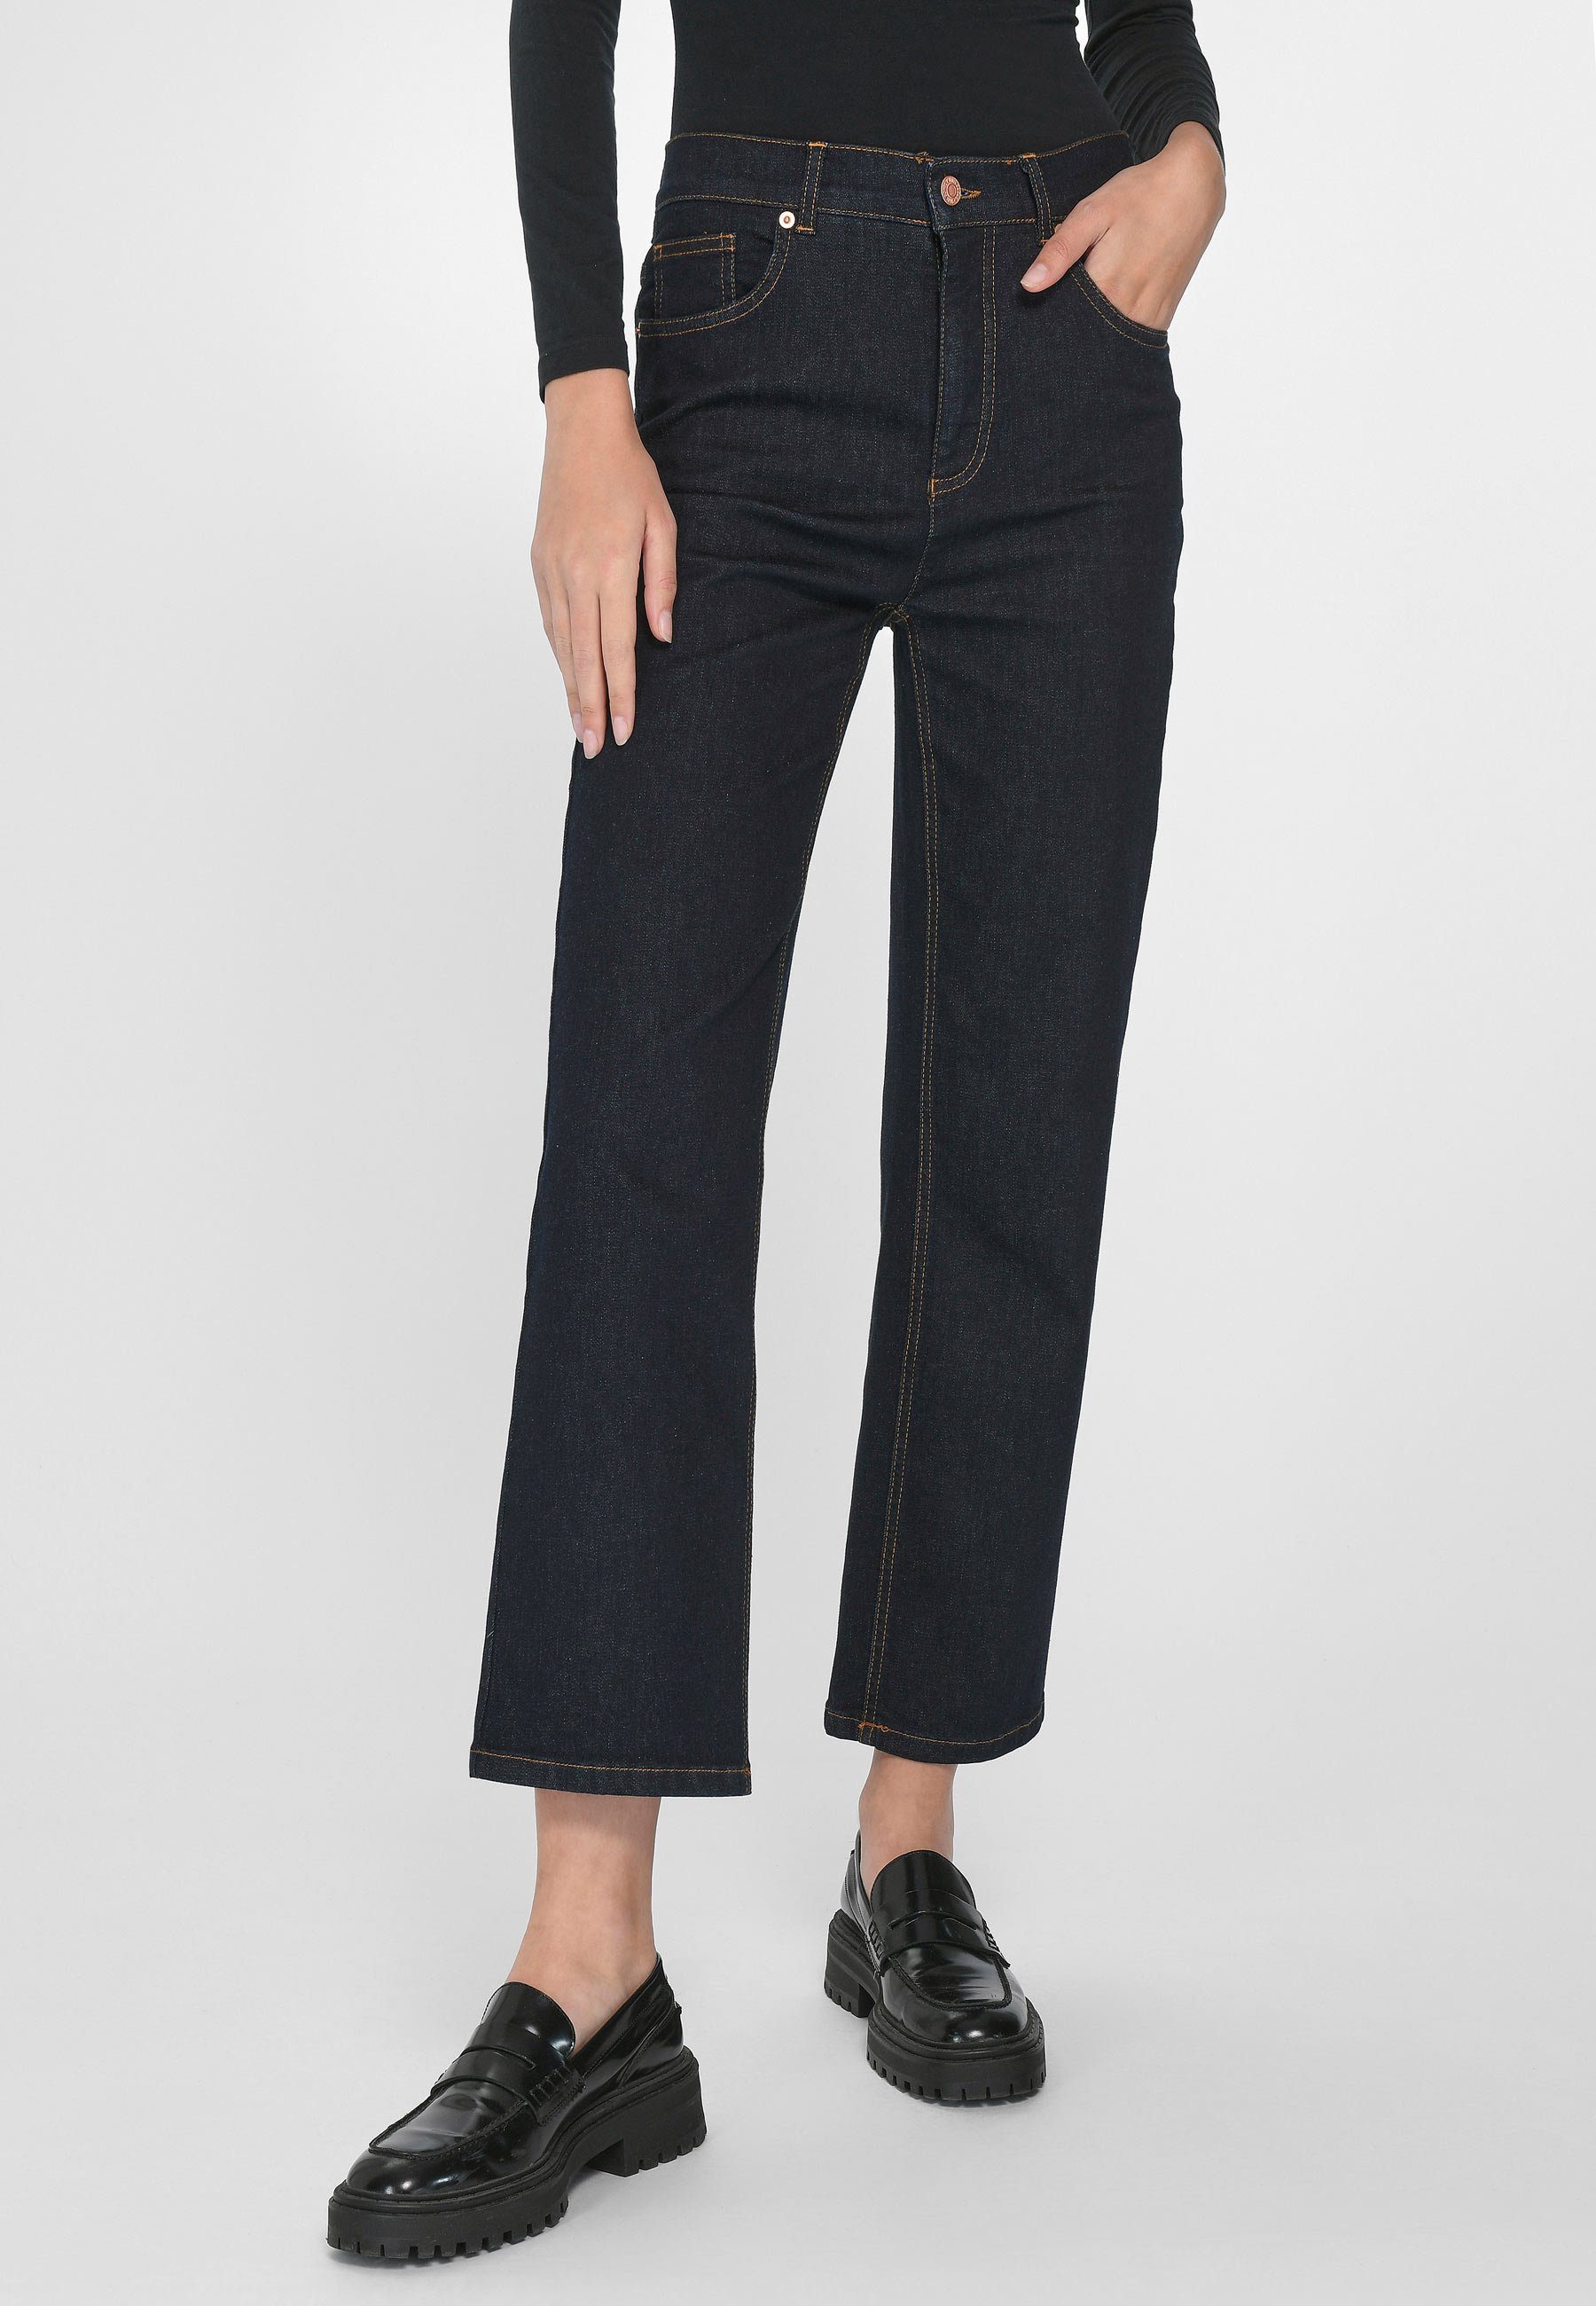 WALL London 5-Pocket-Jeans Cotton mit modernem Design dunkelblau